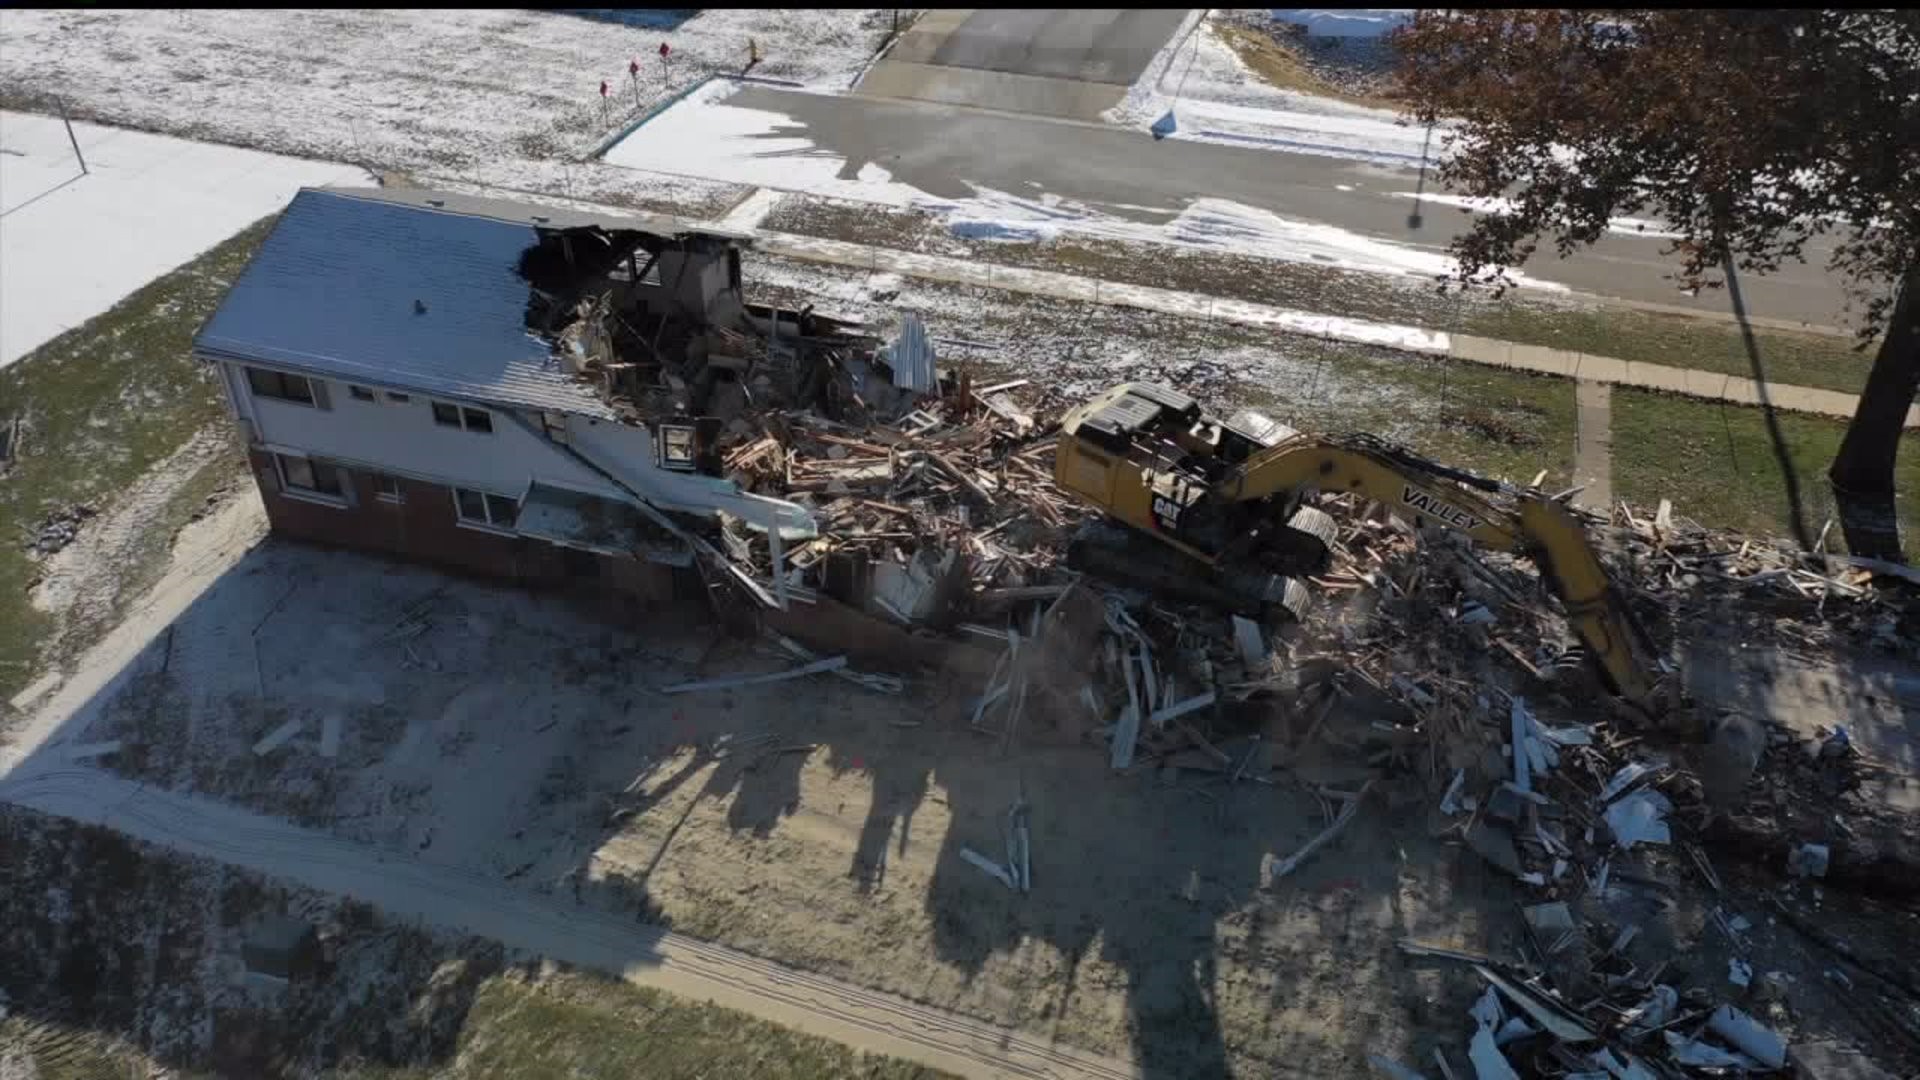 Lincoln Homes demolition underway in Rock Island